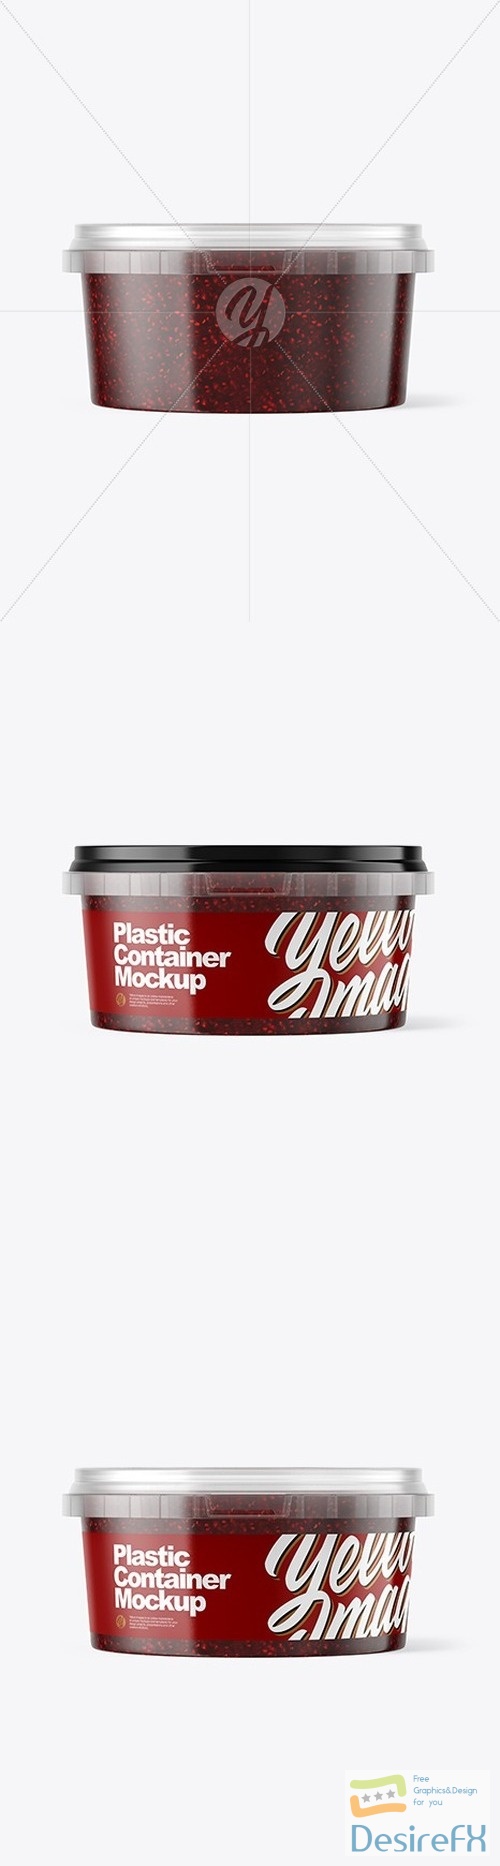 Plastic Container with Raspberry Jam Mockup 50706